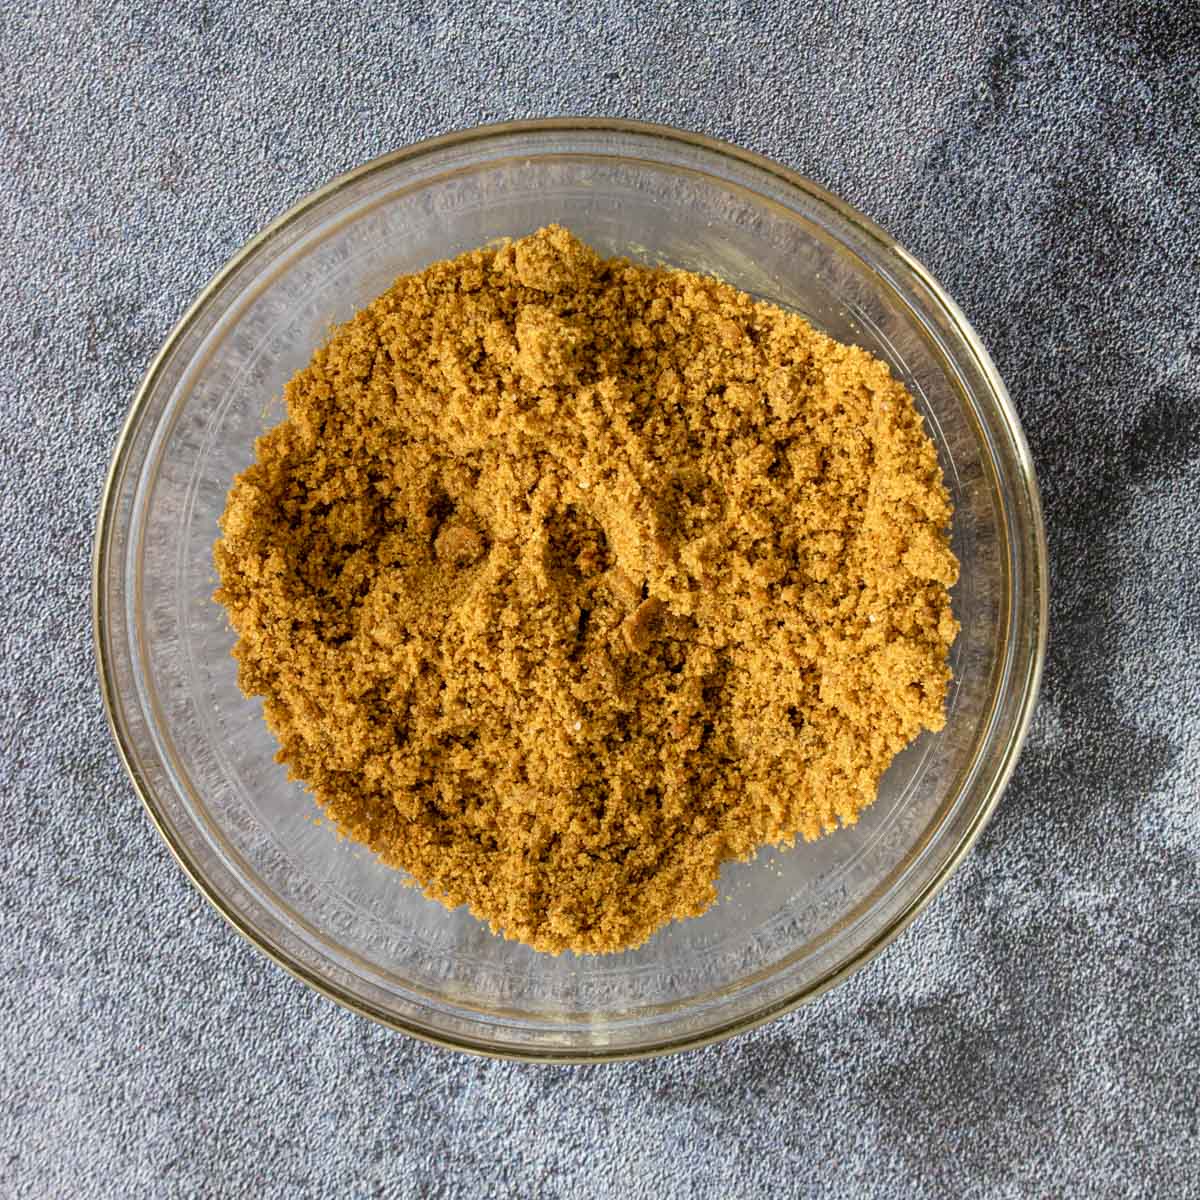 Cinnamon streusel in a bowl